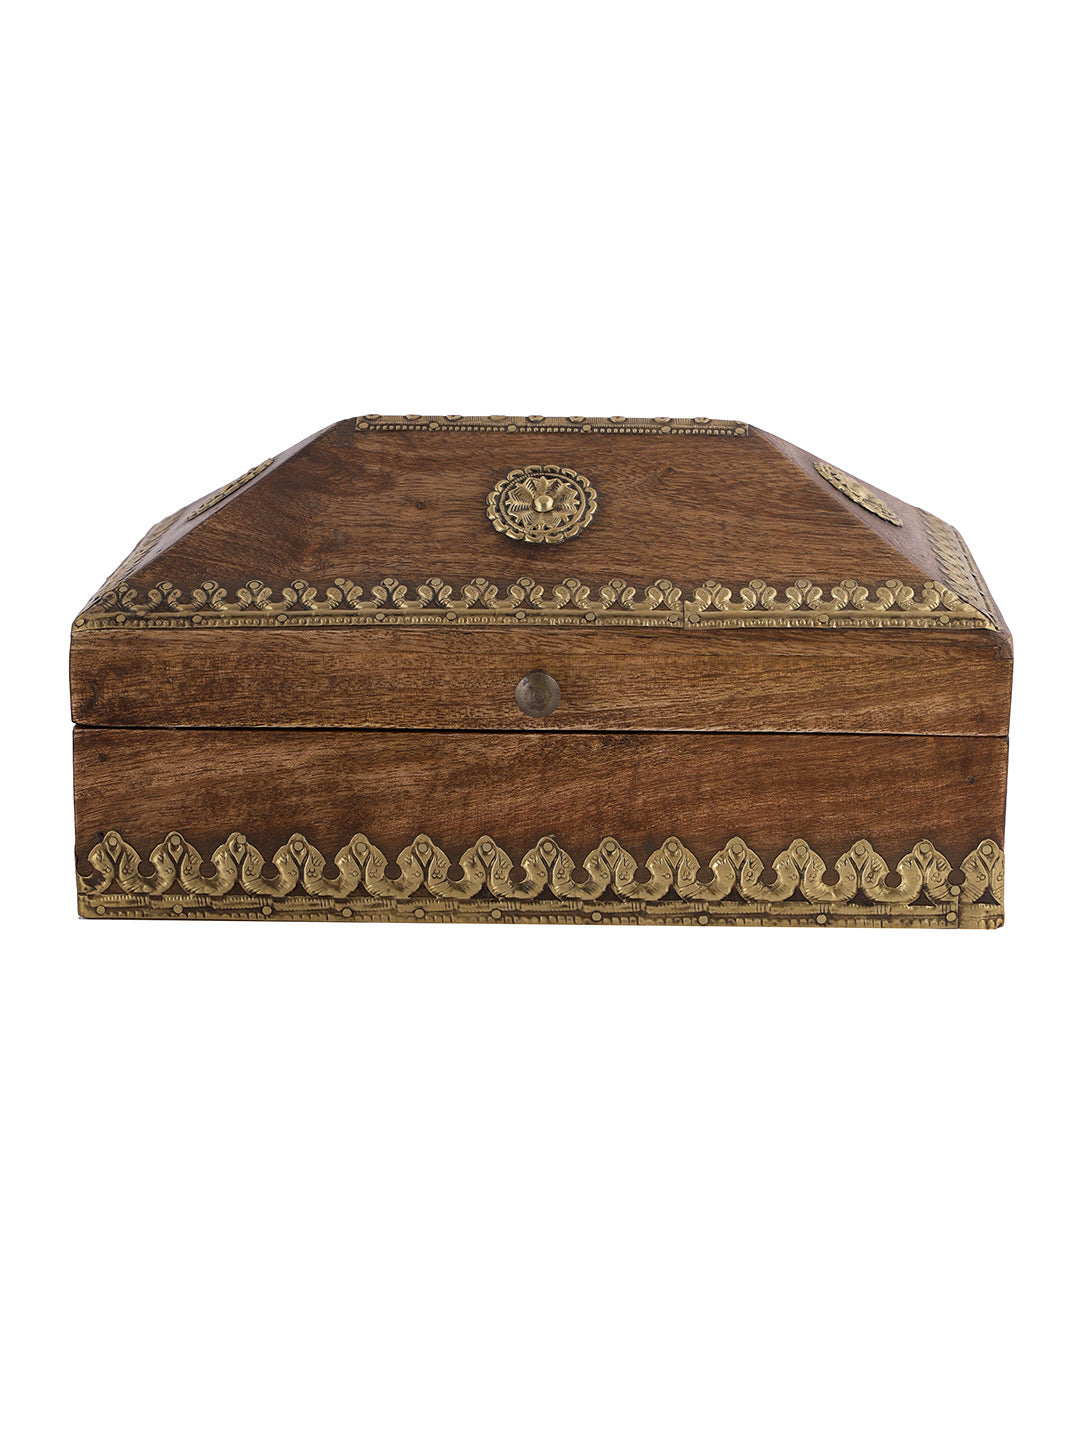 Wooden Solid Storage Box - Default Title (BOXJM2210)